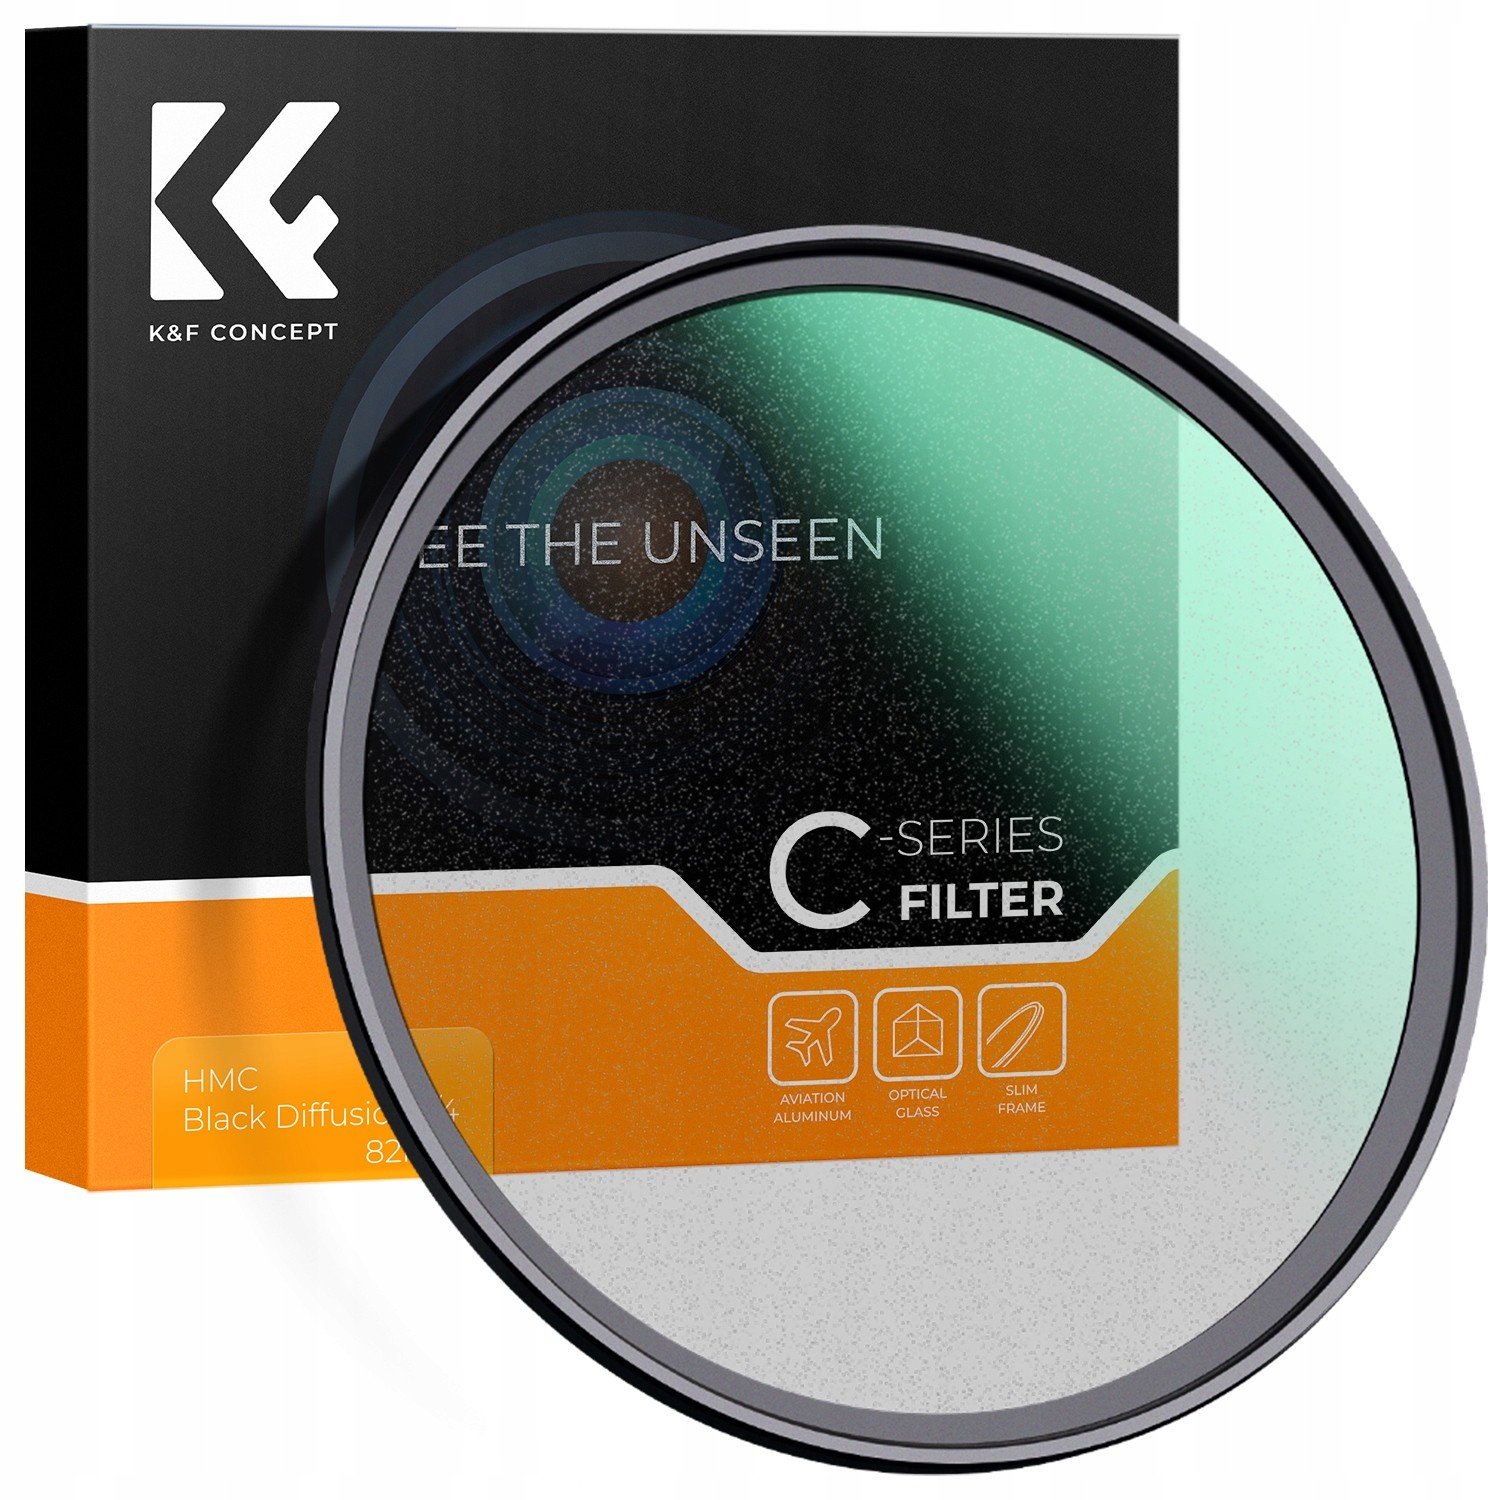 Difuzní filtr Black Mist 1/4 77mm Nano-C K&f